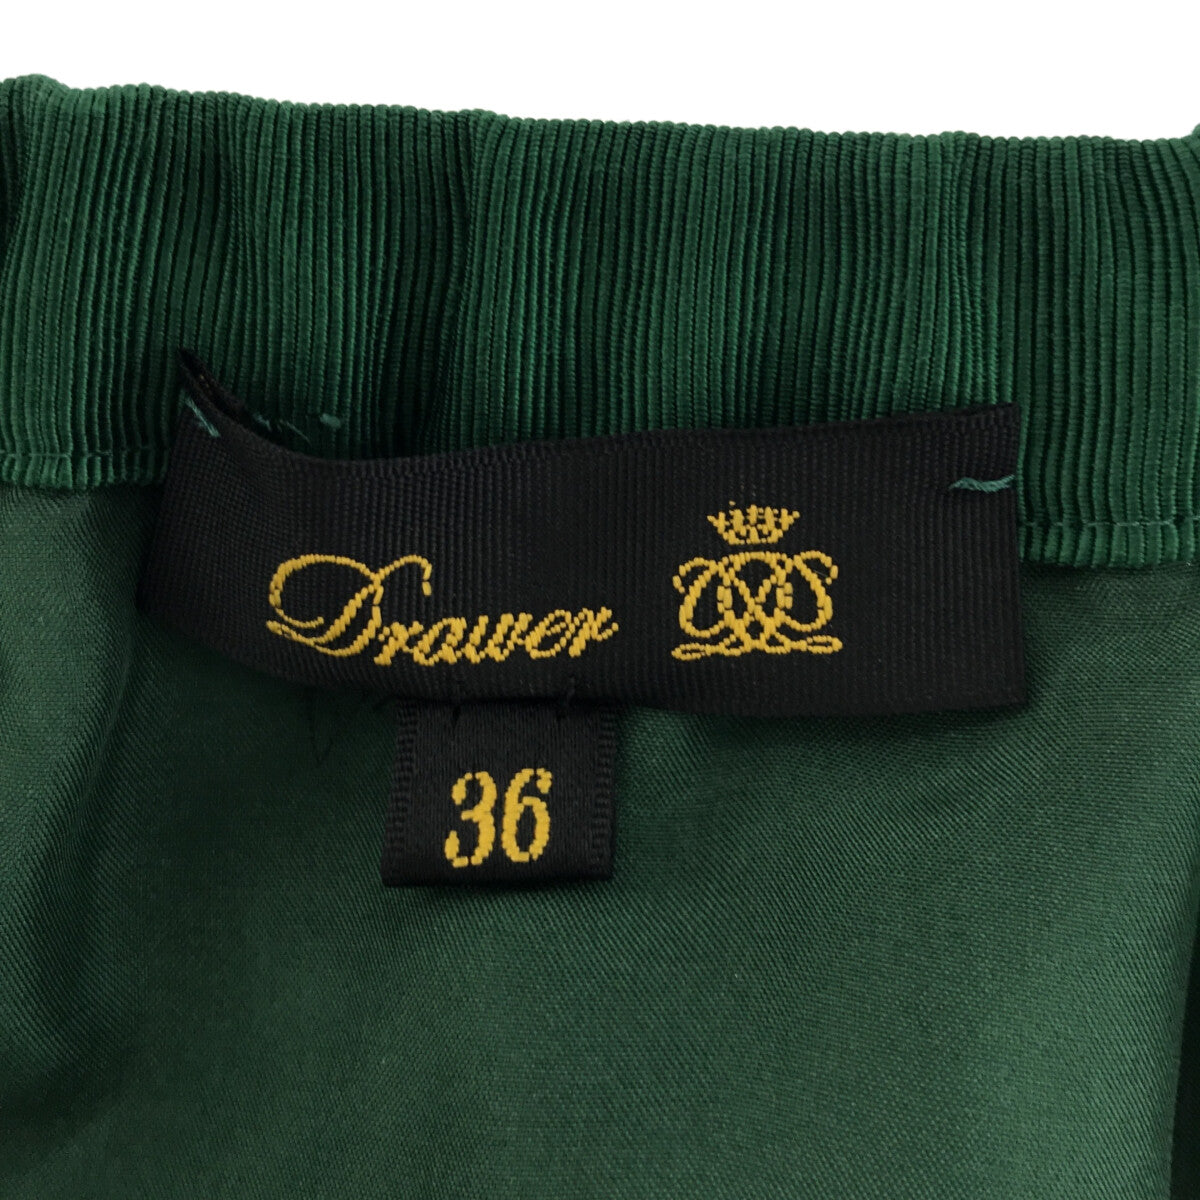 Drawer / ドゥロワー | ラメチェック ギャザースカート | 36 | グリーン | レディース